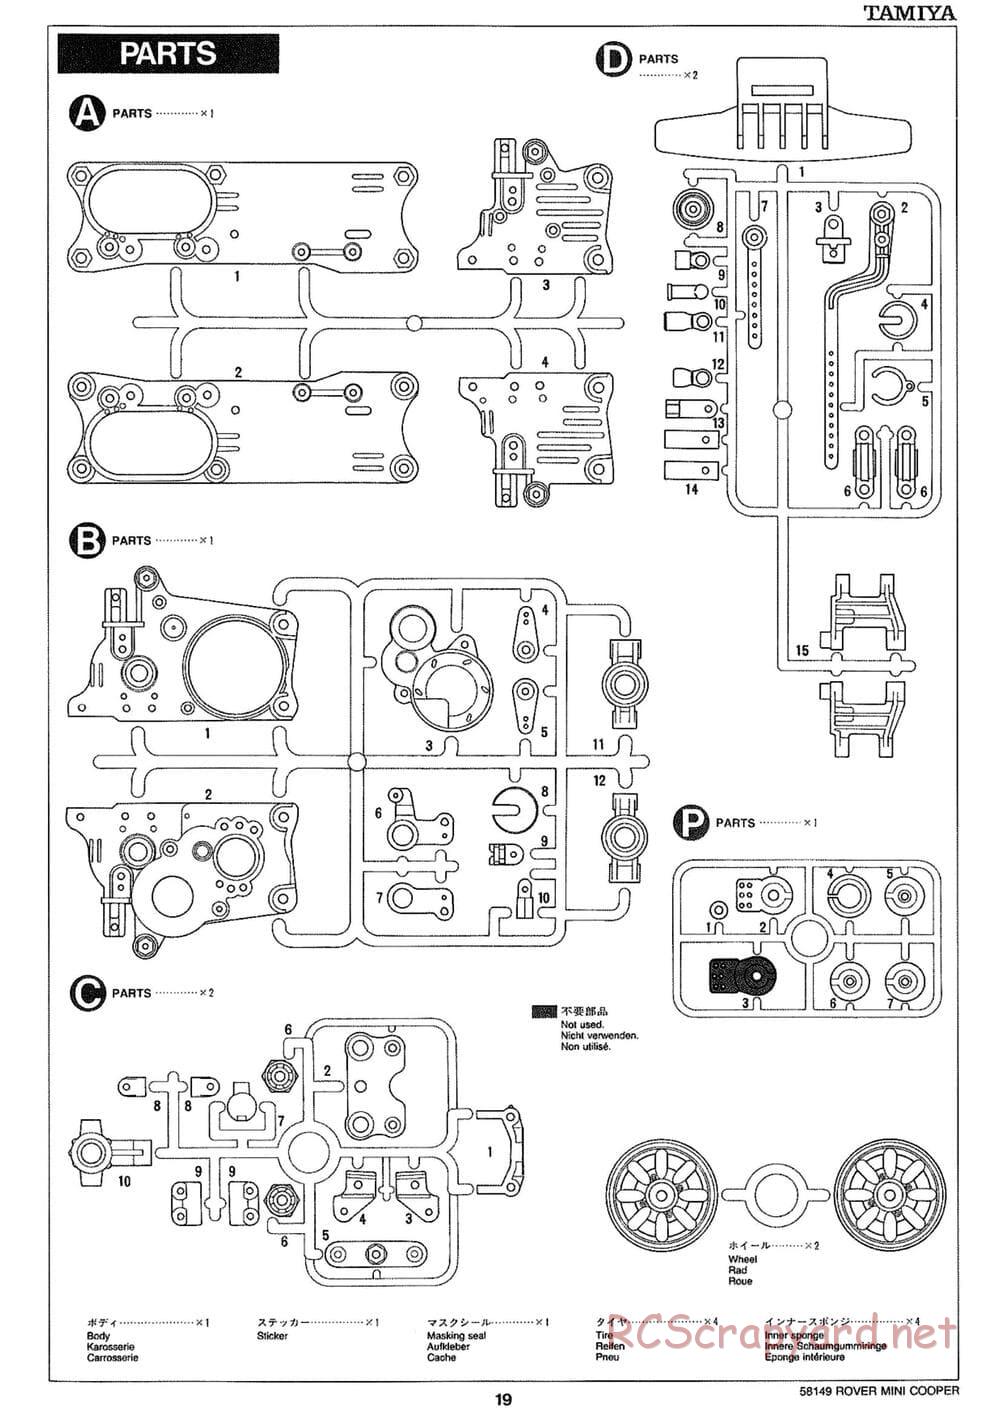 Tamiya - Rover Mini Cooper - M01 Chassis - Manual - Page 19